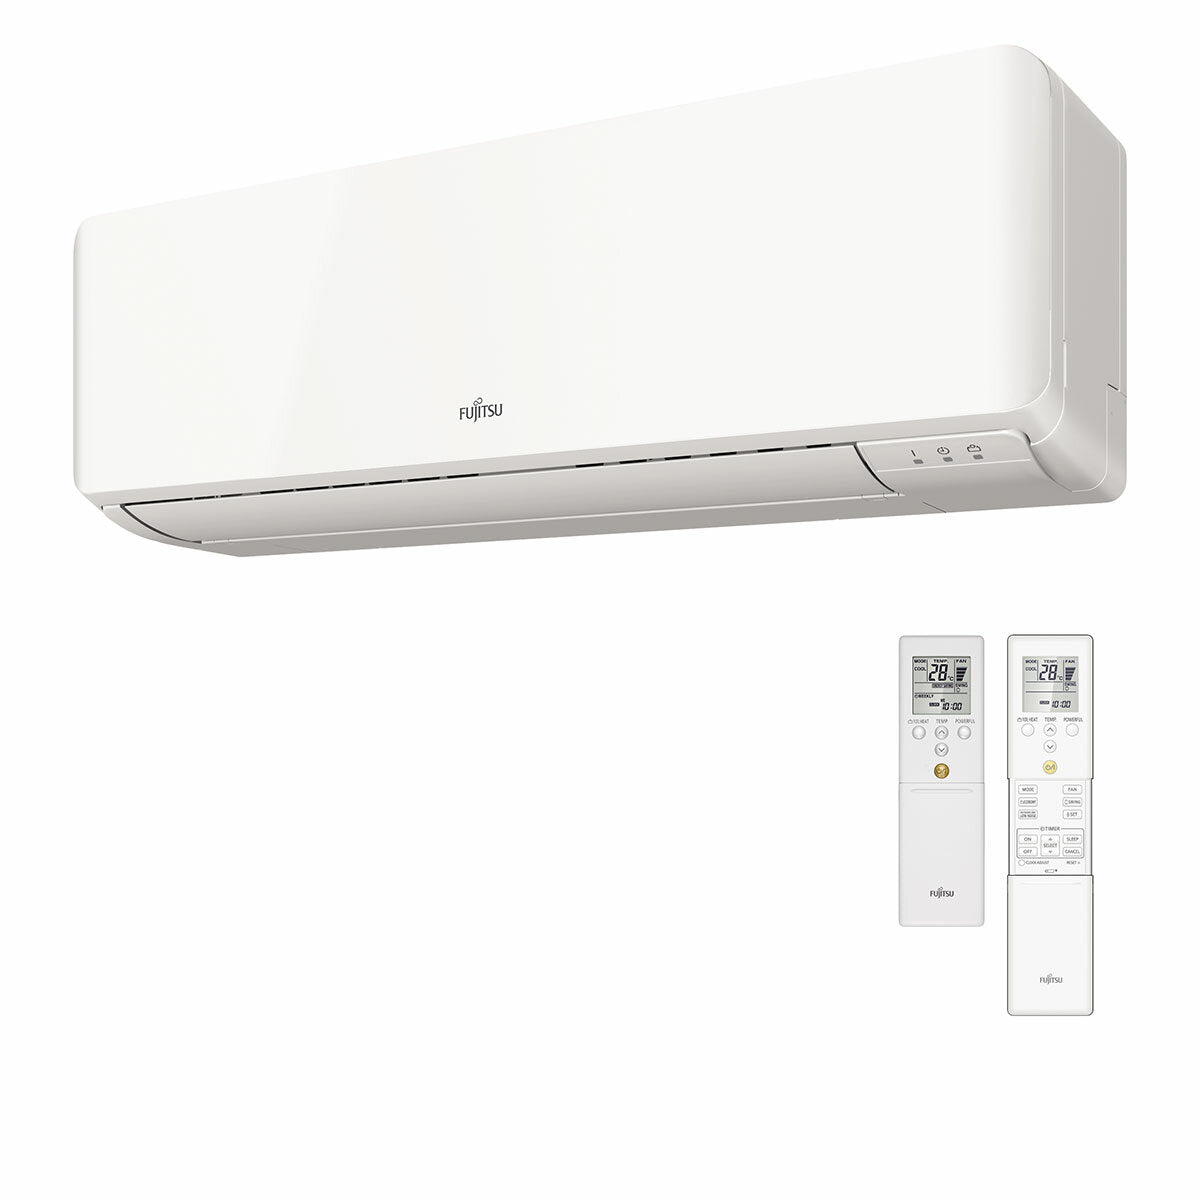 Fujitsu air conditioner KM WiFi Series trial split 7000+7000+9000 BTU inverter A+++ external unit 5.4 kW